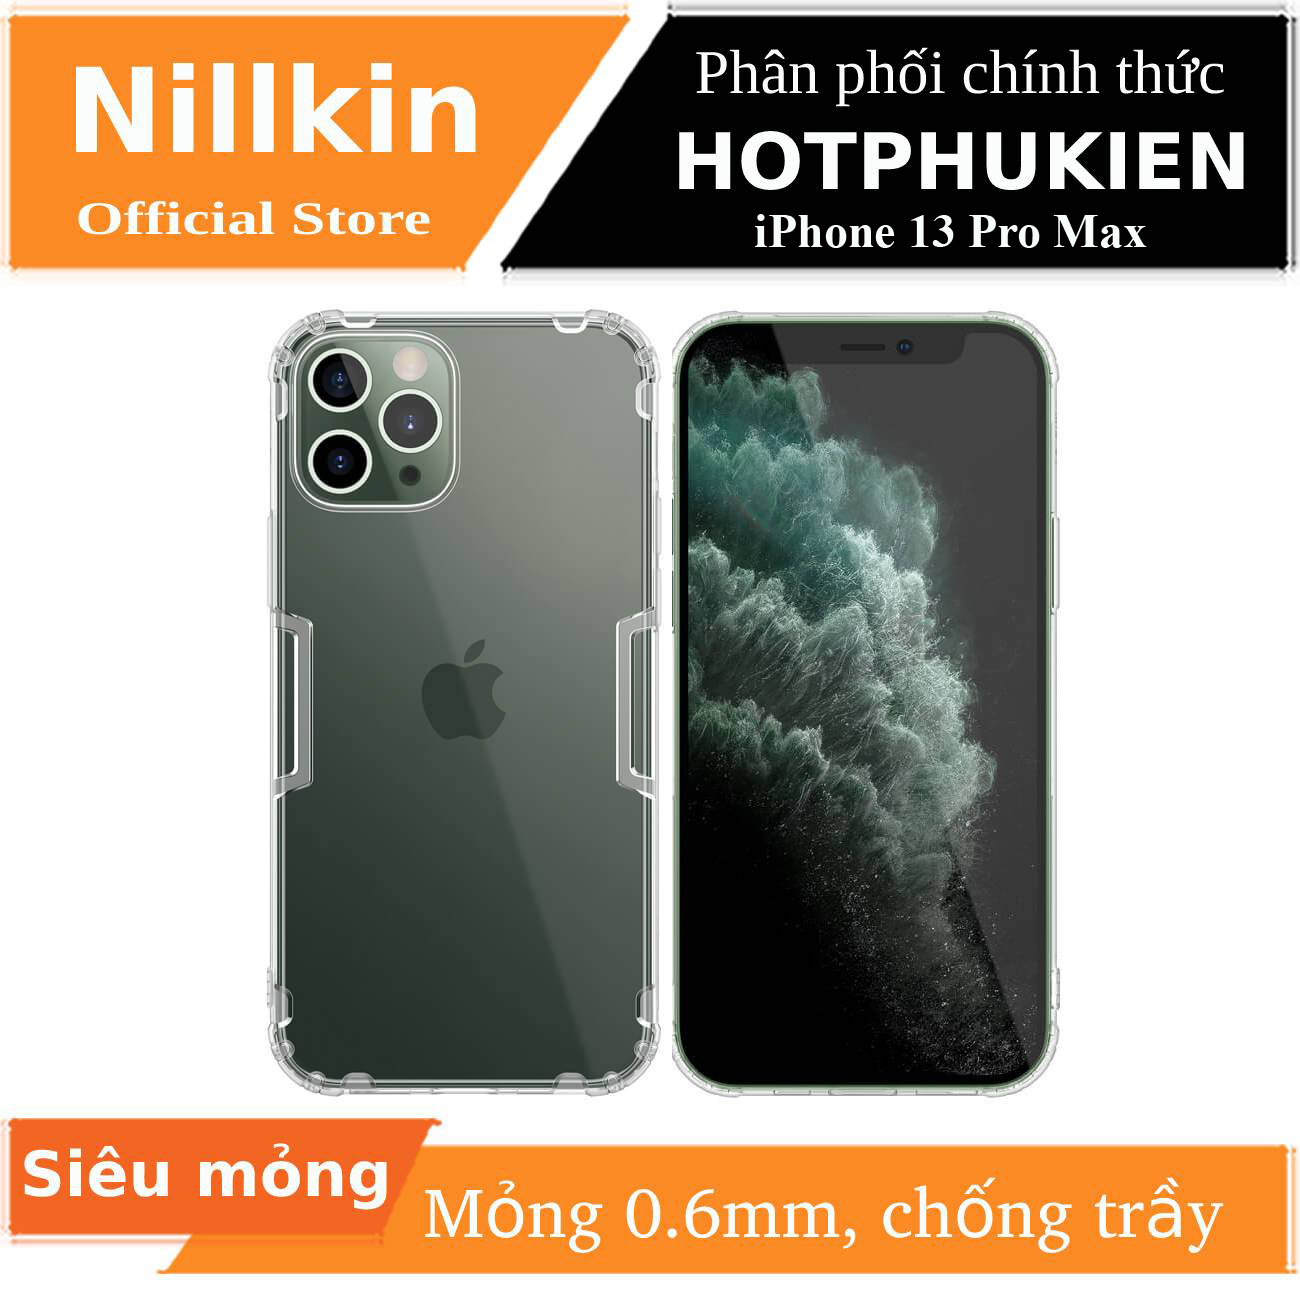 Ốp lưng silicon dẻo trong suốt cho iPhone 13 Pro Max hiệu Nillkin mỏng 0.6mm